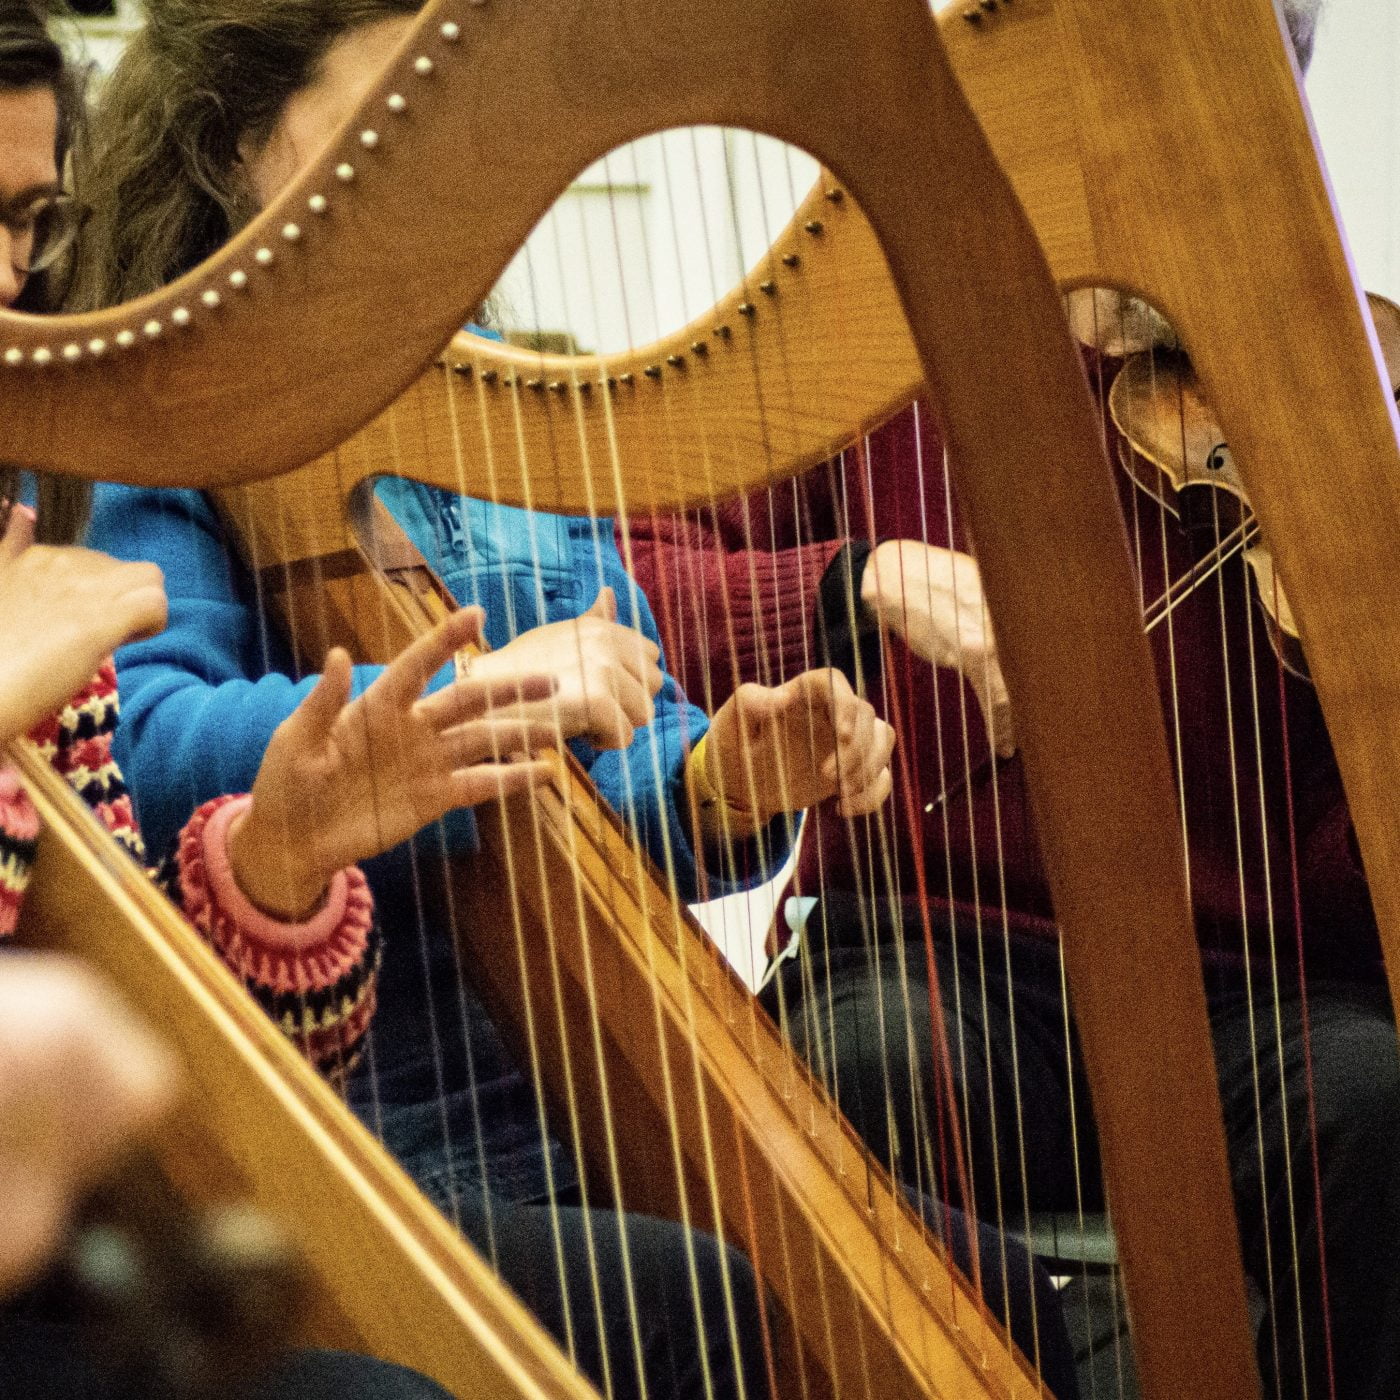 Edinburgh International Harp Festival